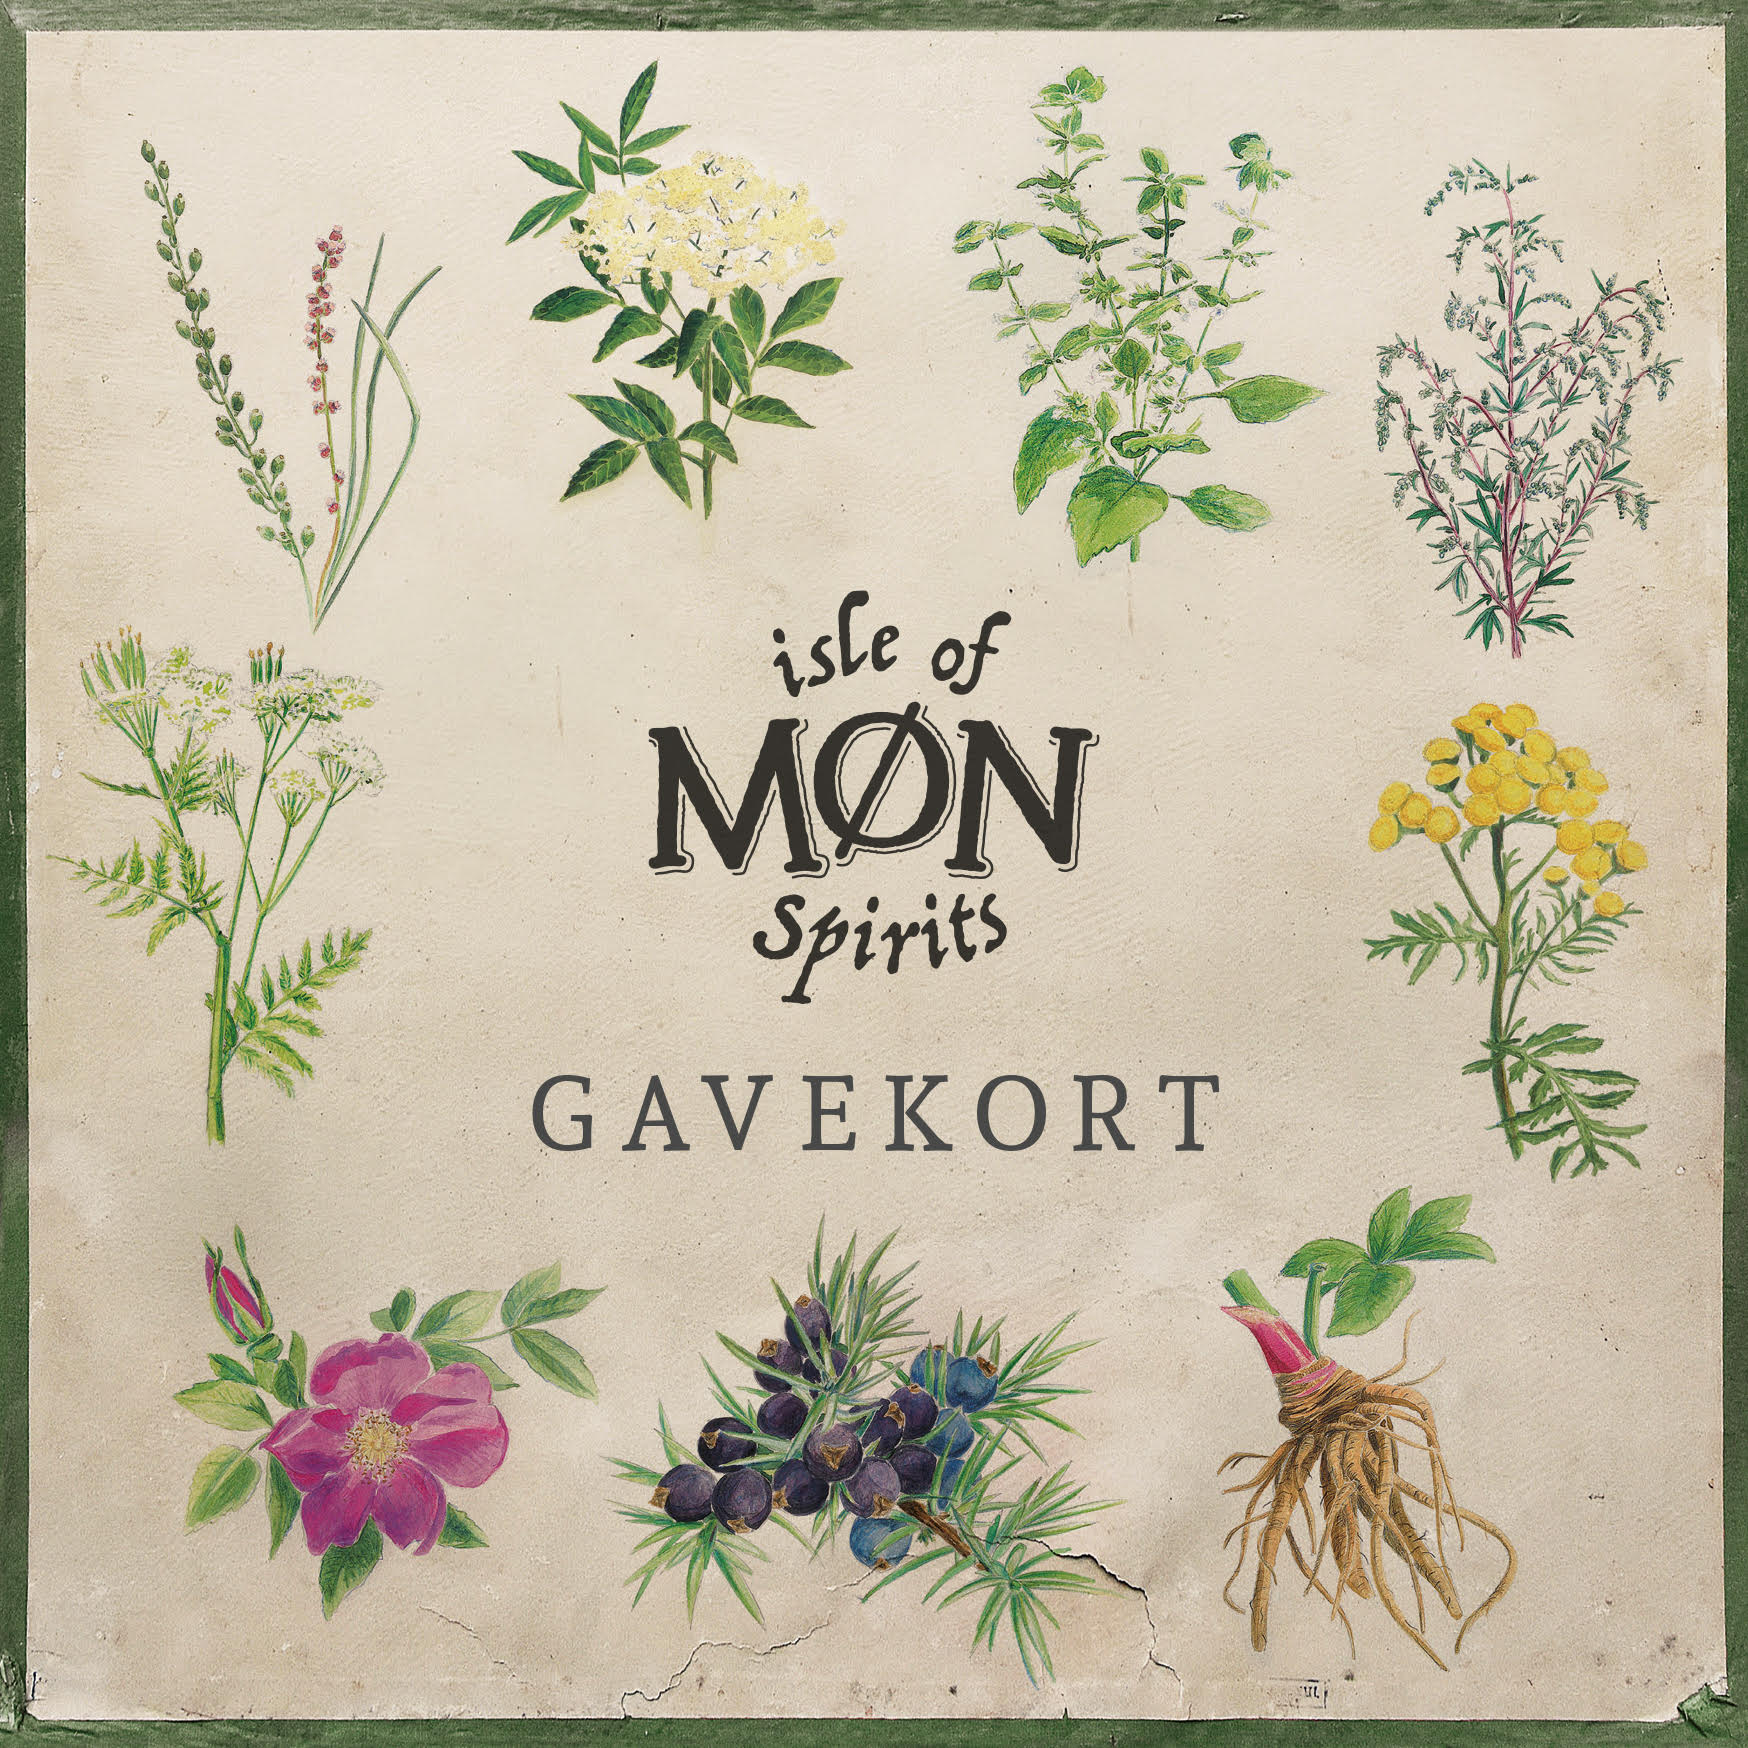 Gavekort - Isle of Møn Spirits